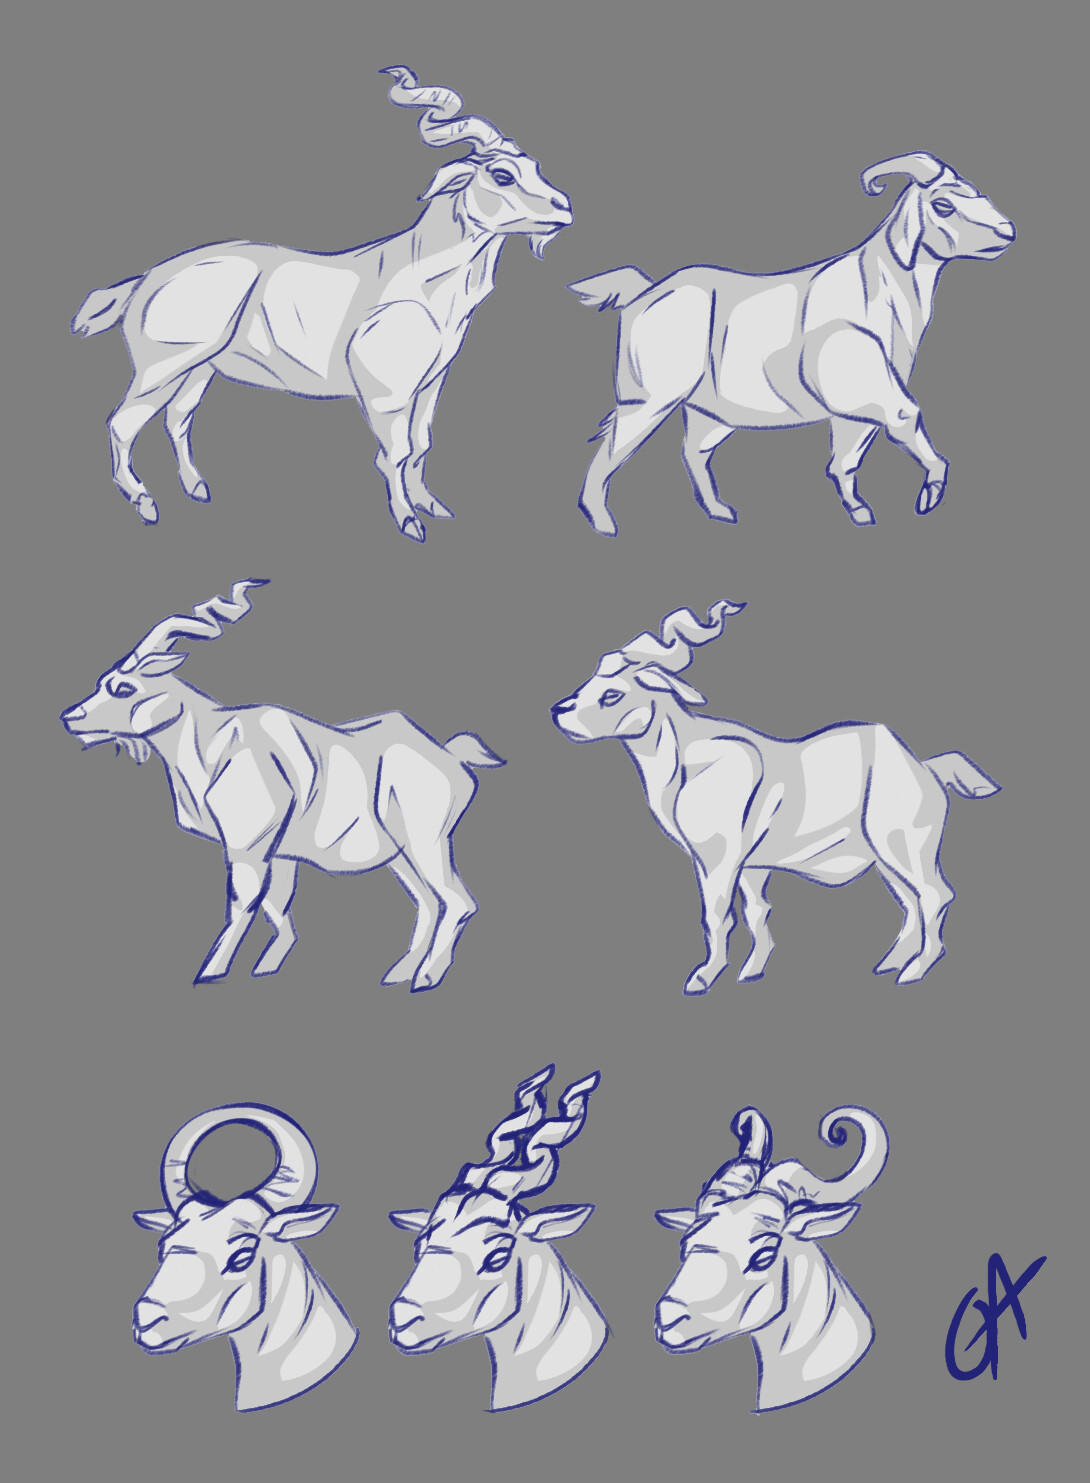 Goat anatomy studies - loosely based on the Bulgarian Screwhorn - weird legs